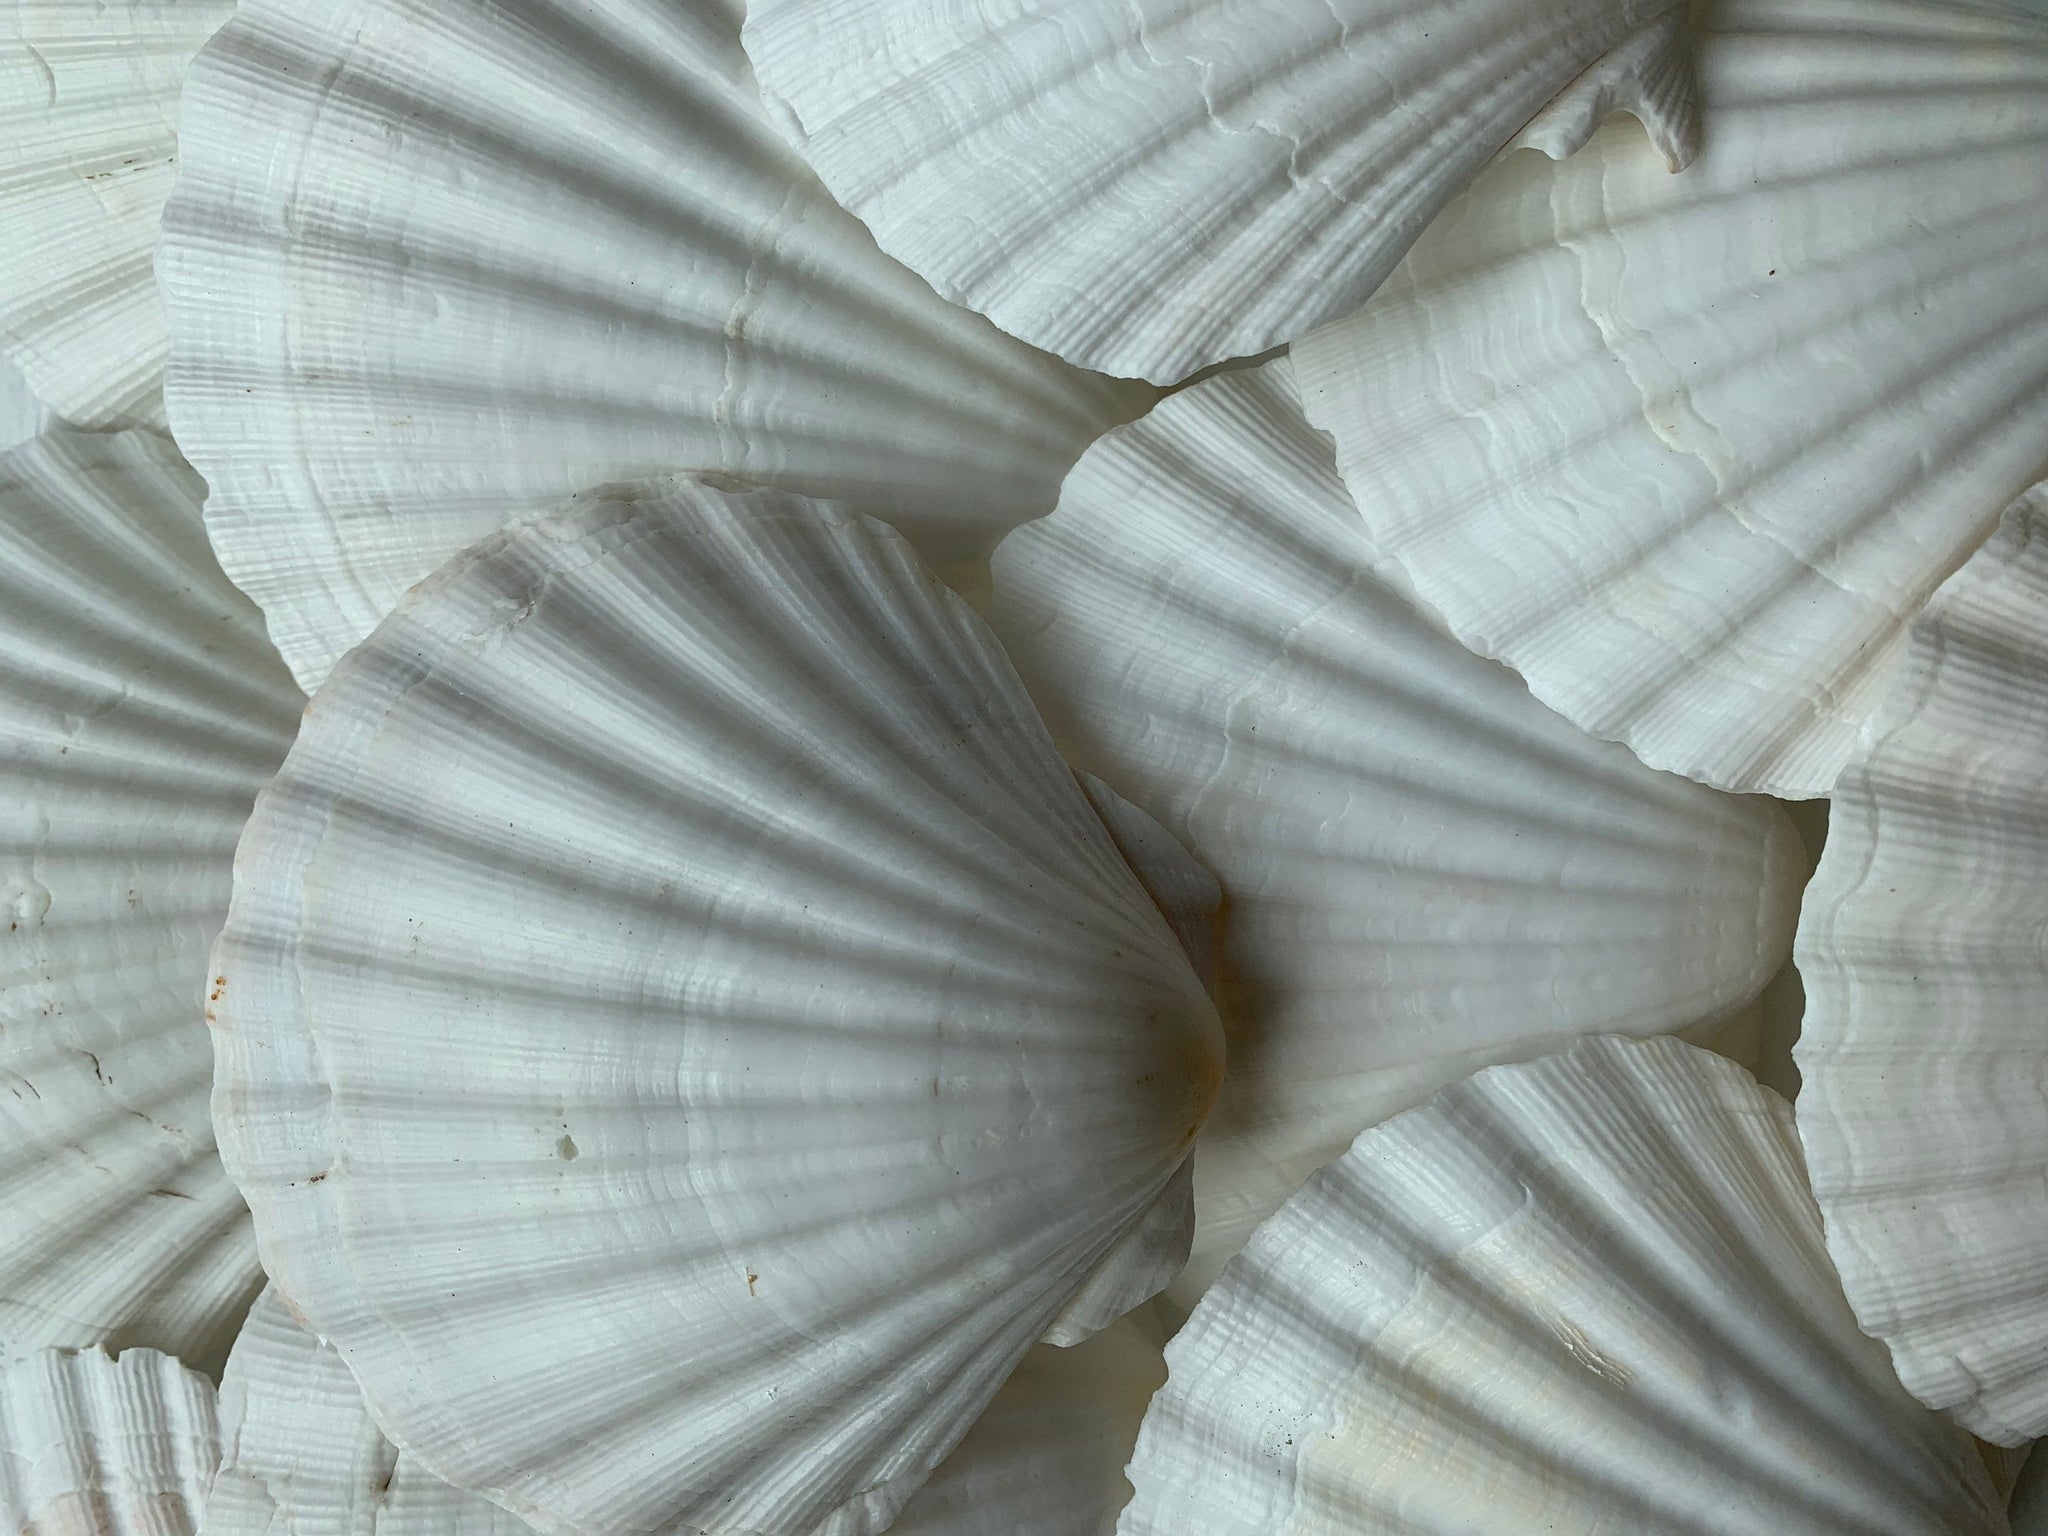 Irish Deep Baking Scallop Shell 4-4.5 - Seashell Supplies